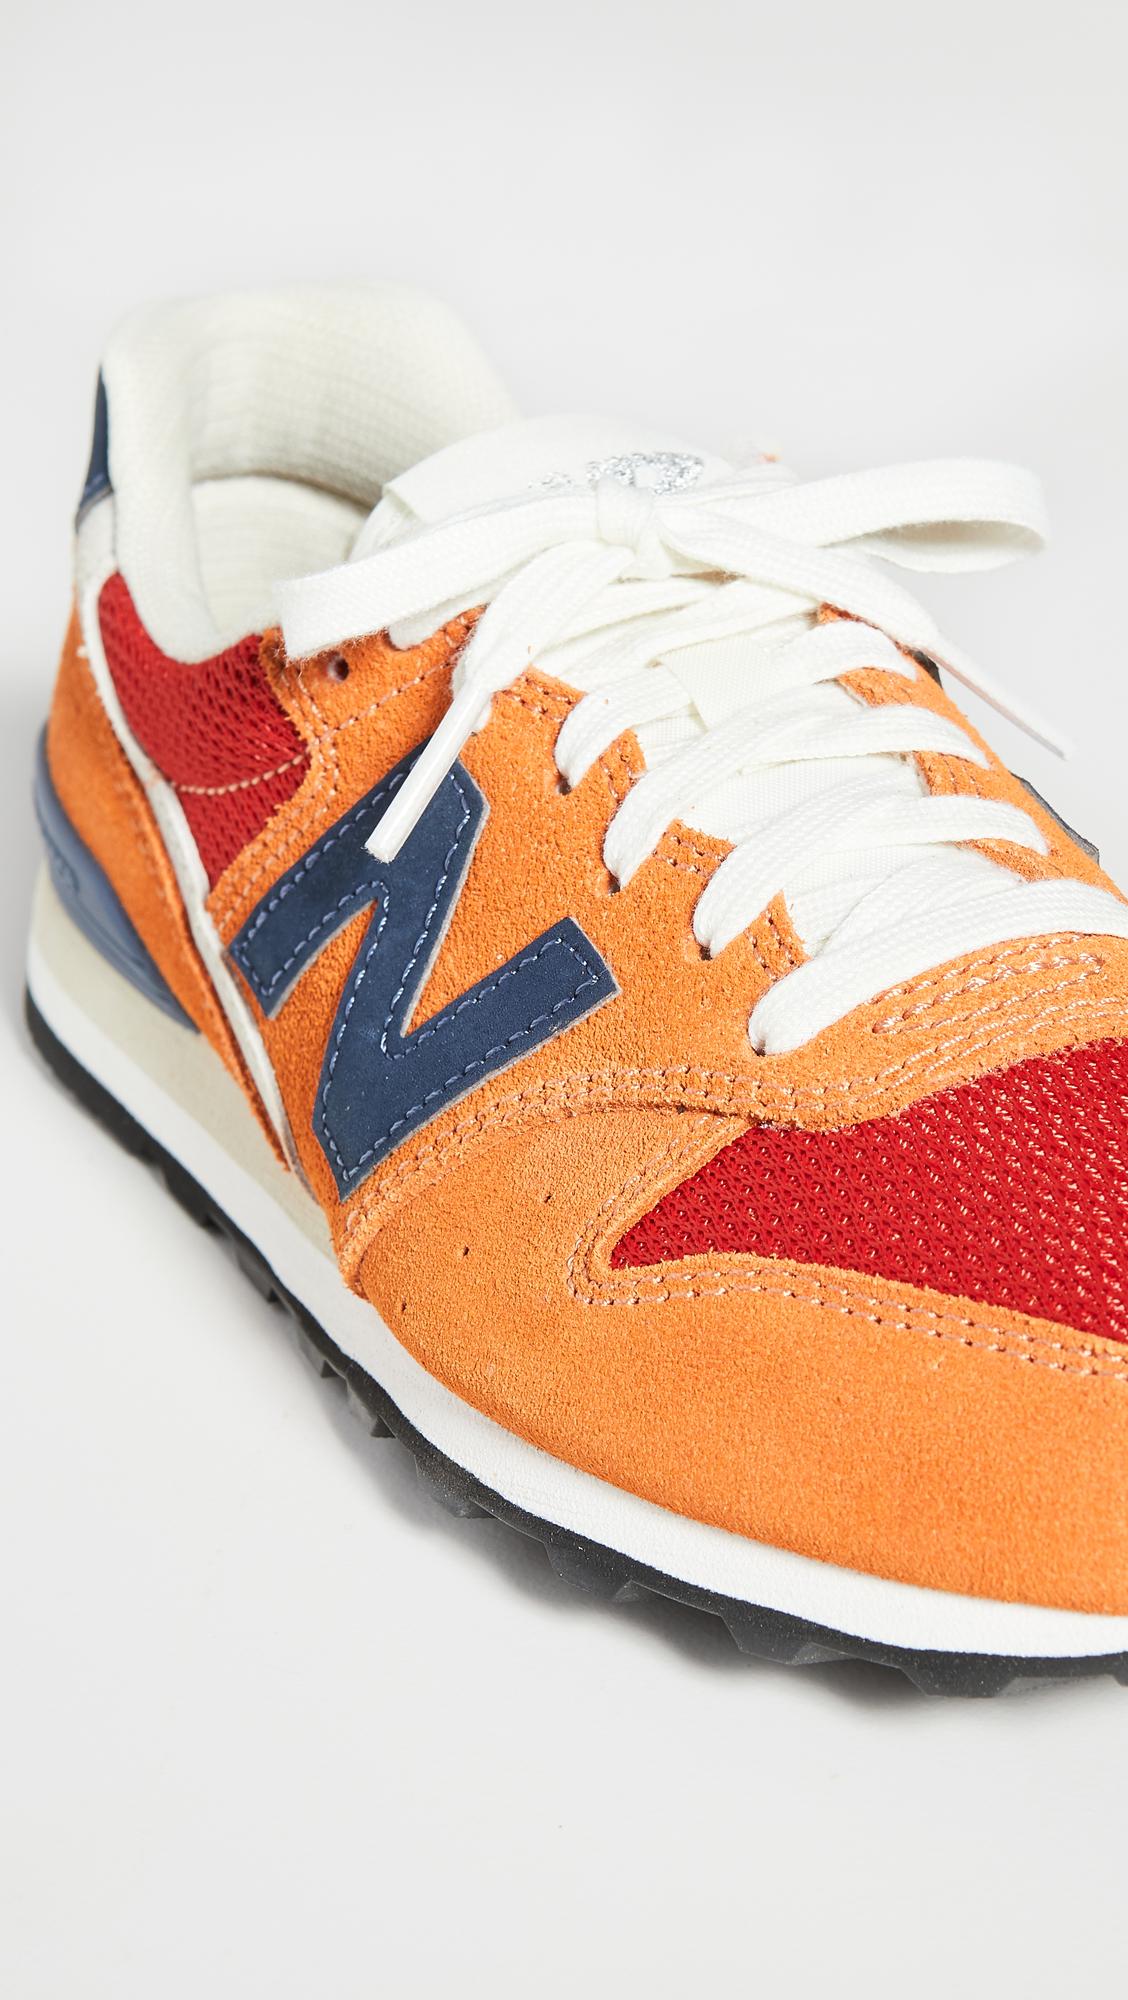 New Balance 996 V2 Sneakers in Orange | Lyst